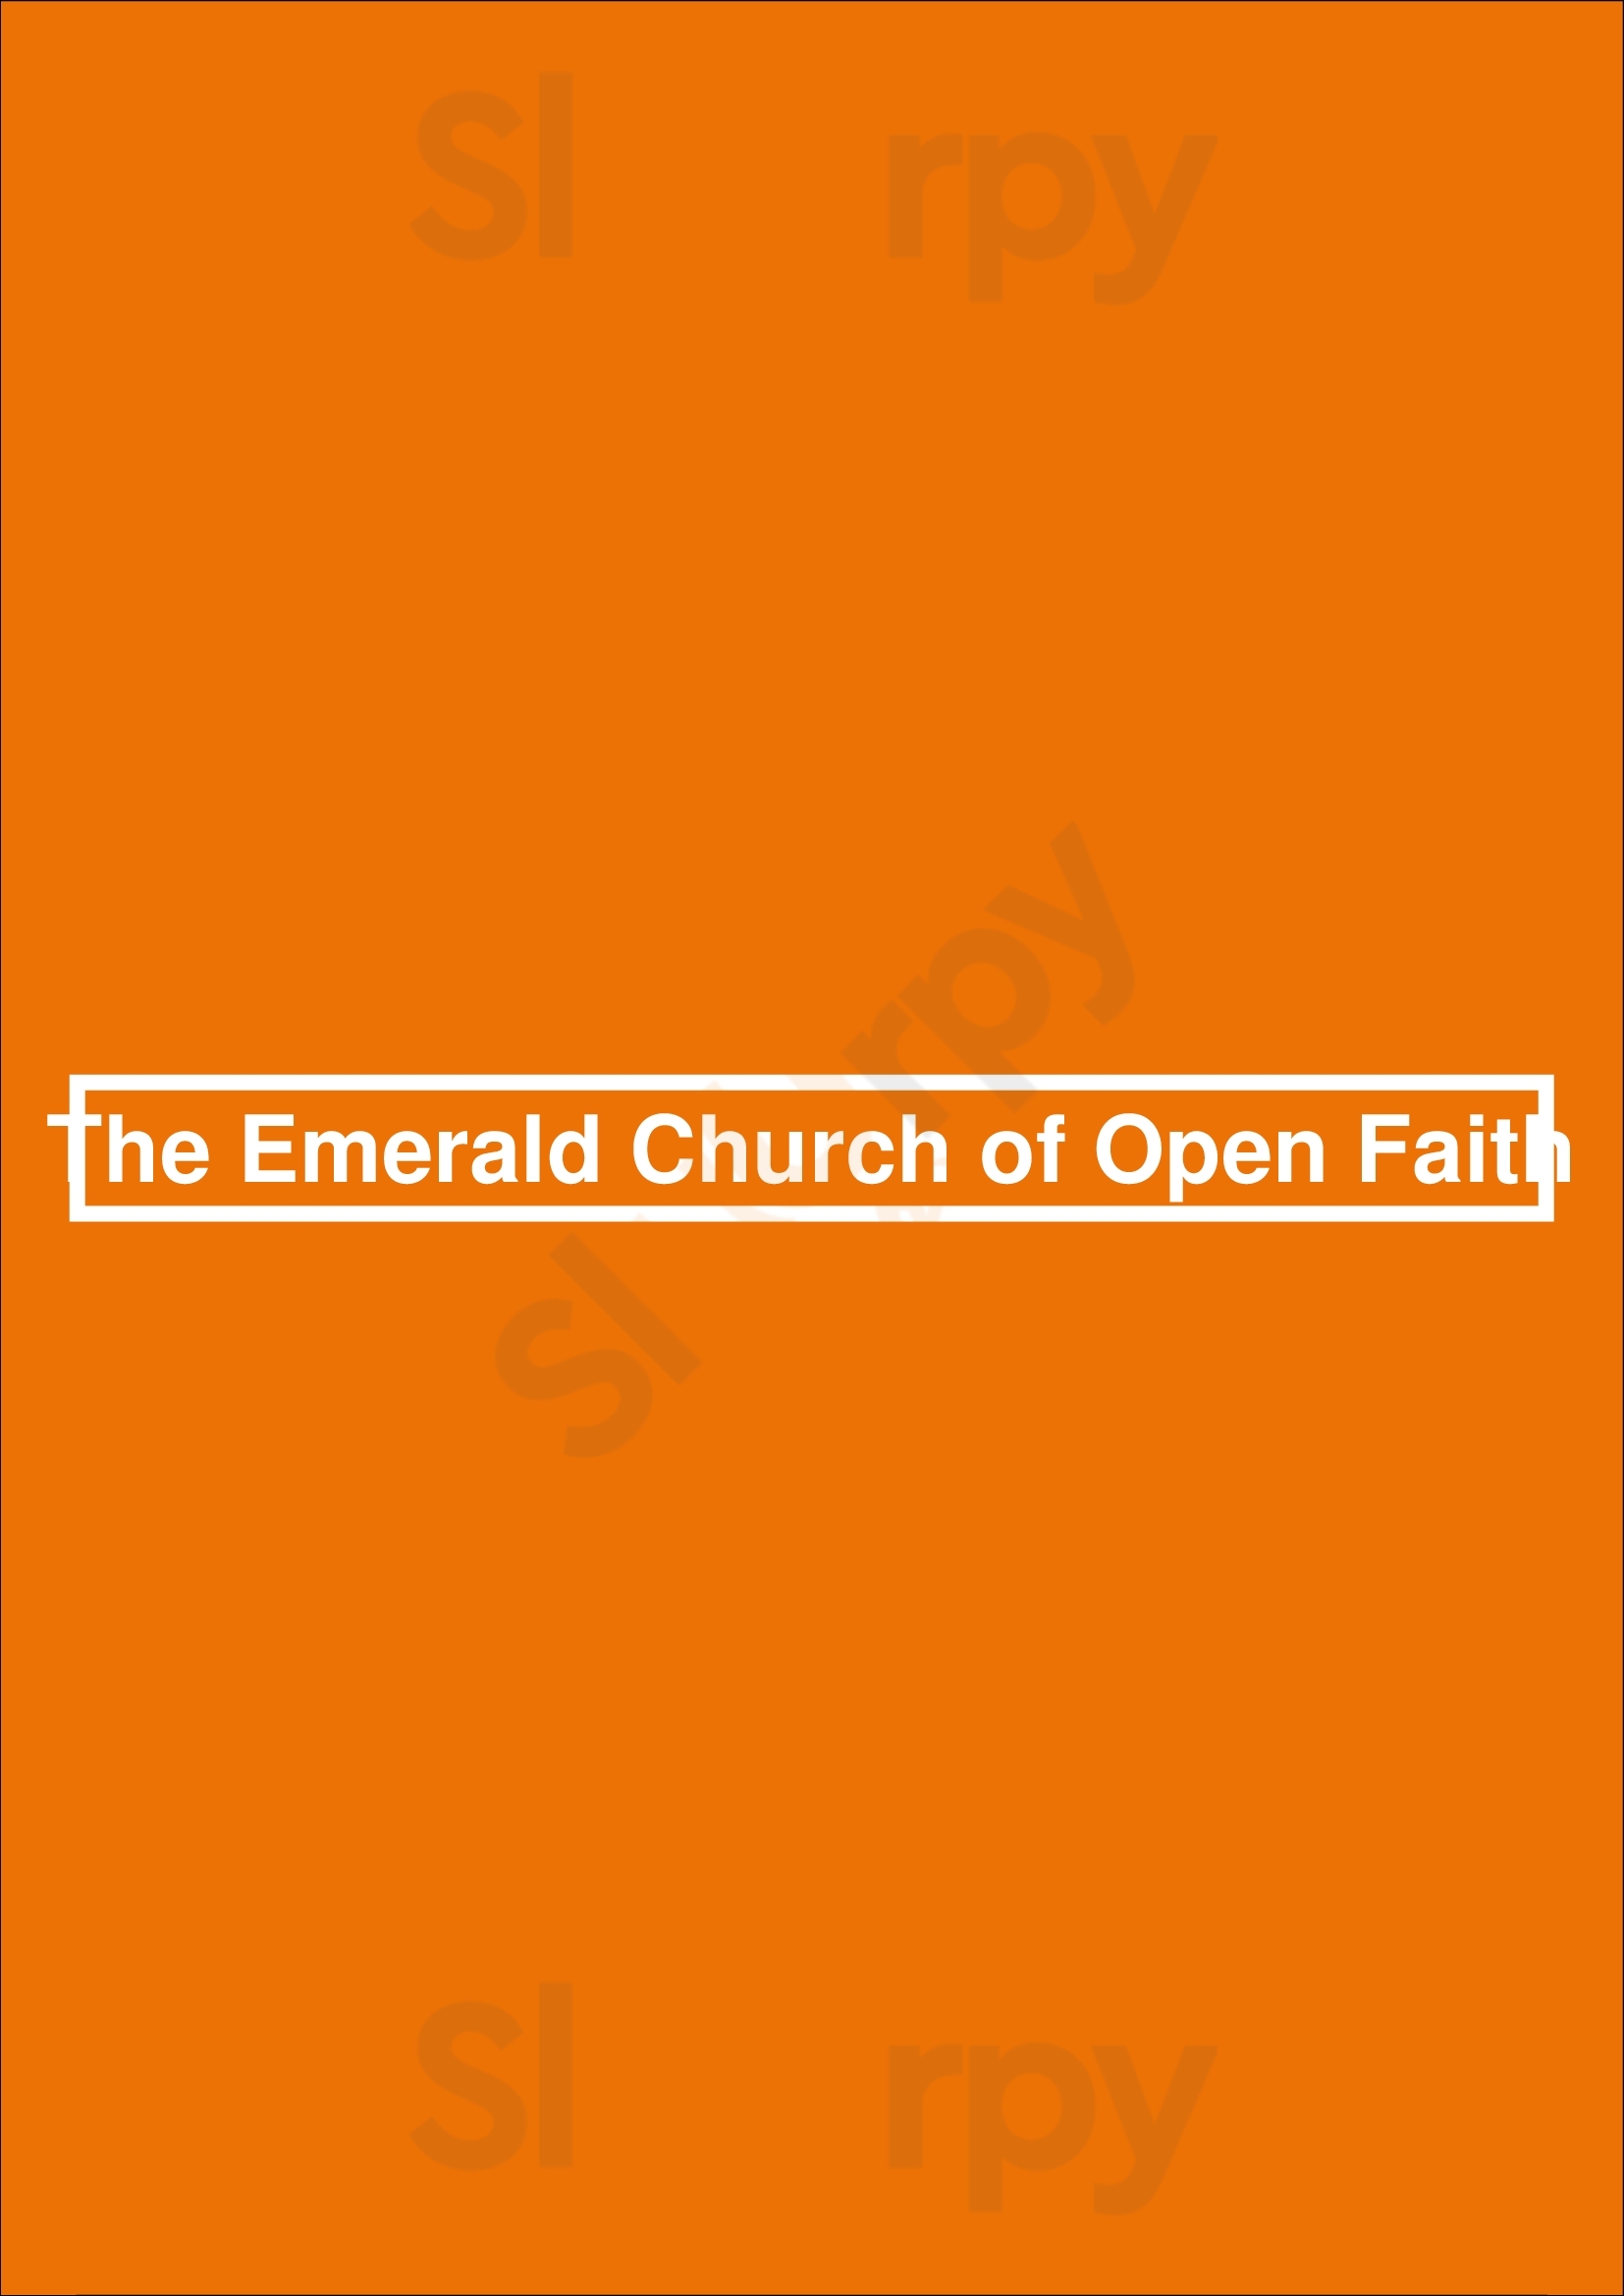 The Emerald Church Of Open Faith Torrance Menu - 1